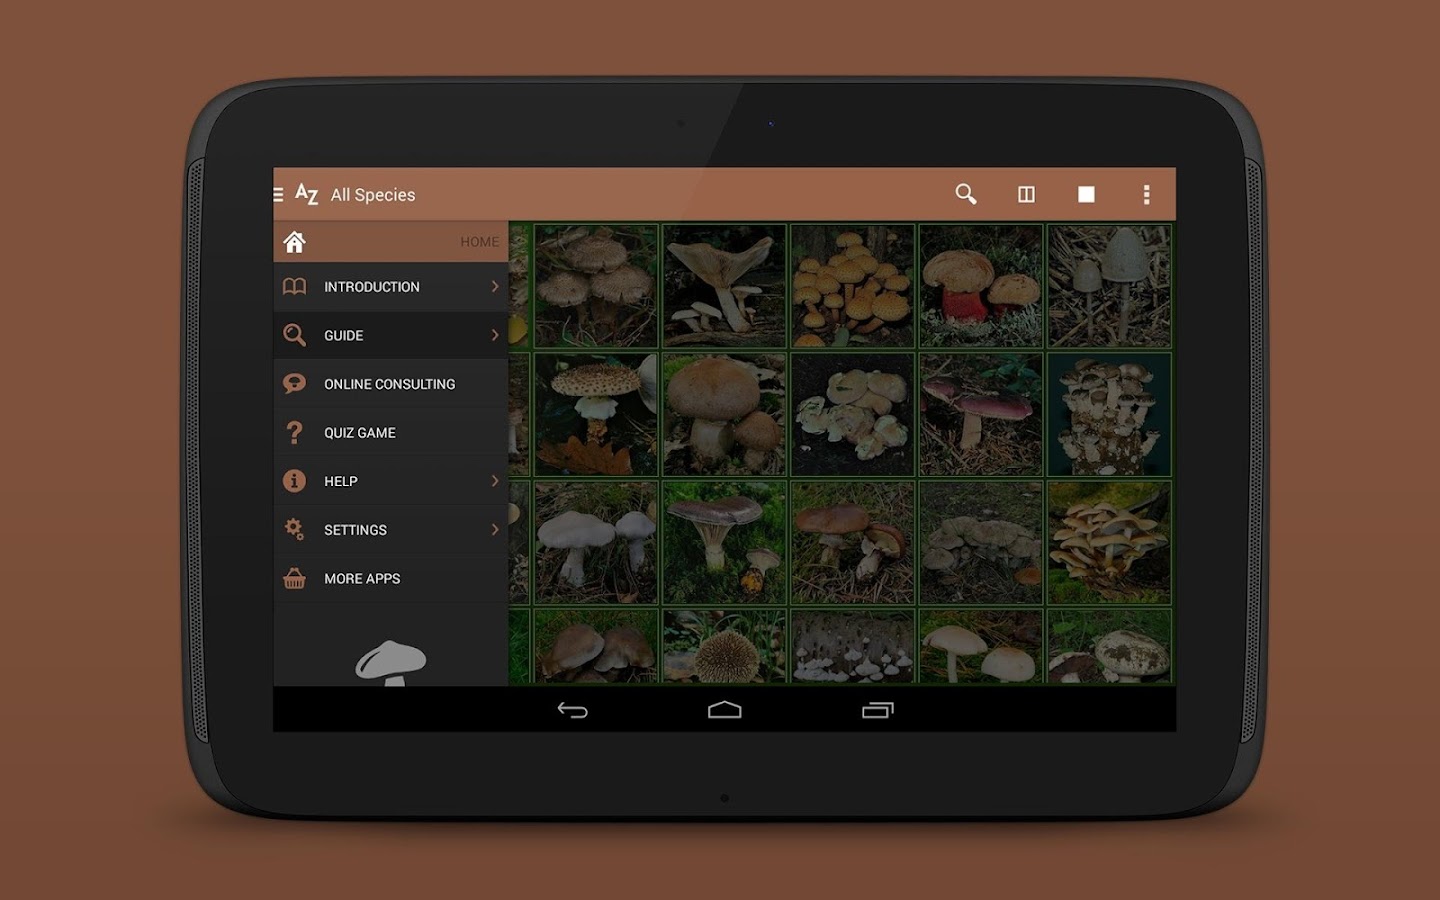 IKnow Mushrooms 2 PRO Latest [Full Version] Android APK 